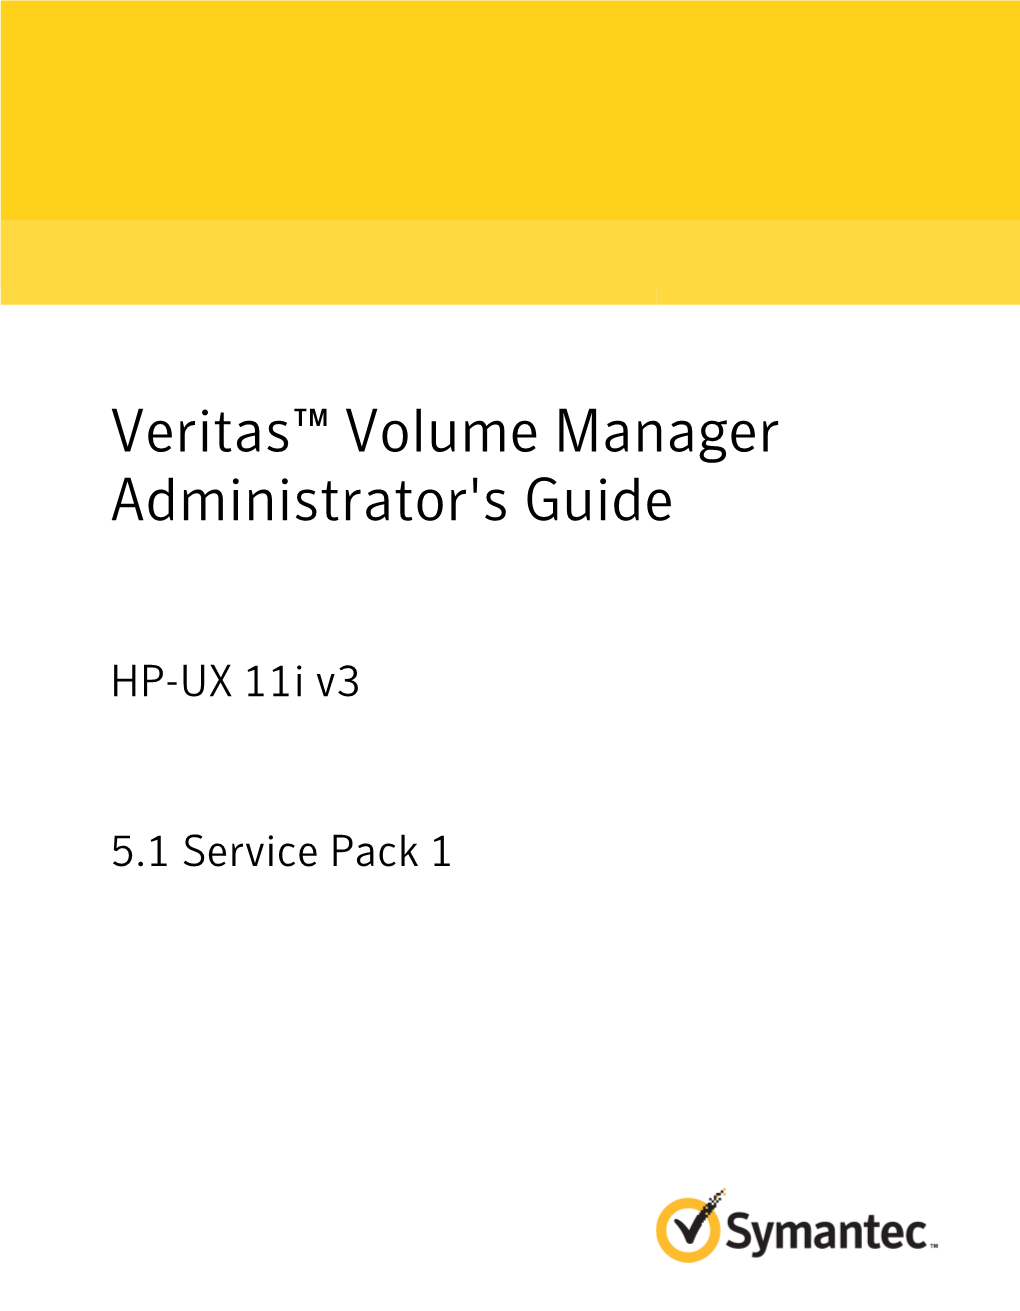 Veritas™ Volume Manager Administrator's Guide: HP-UX 11I V3